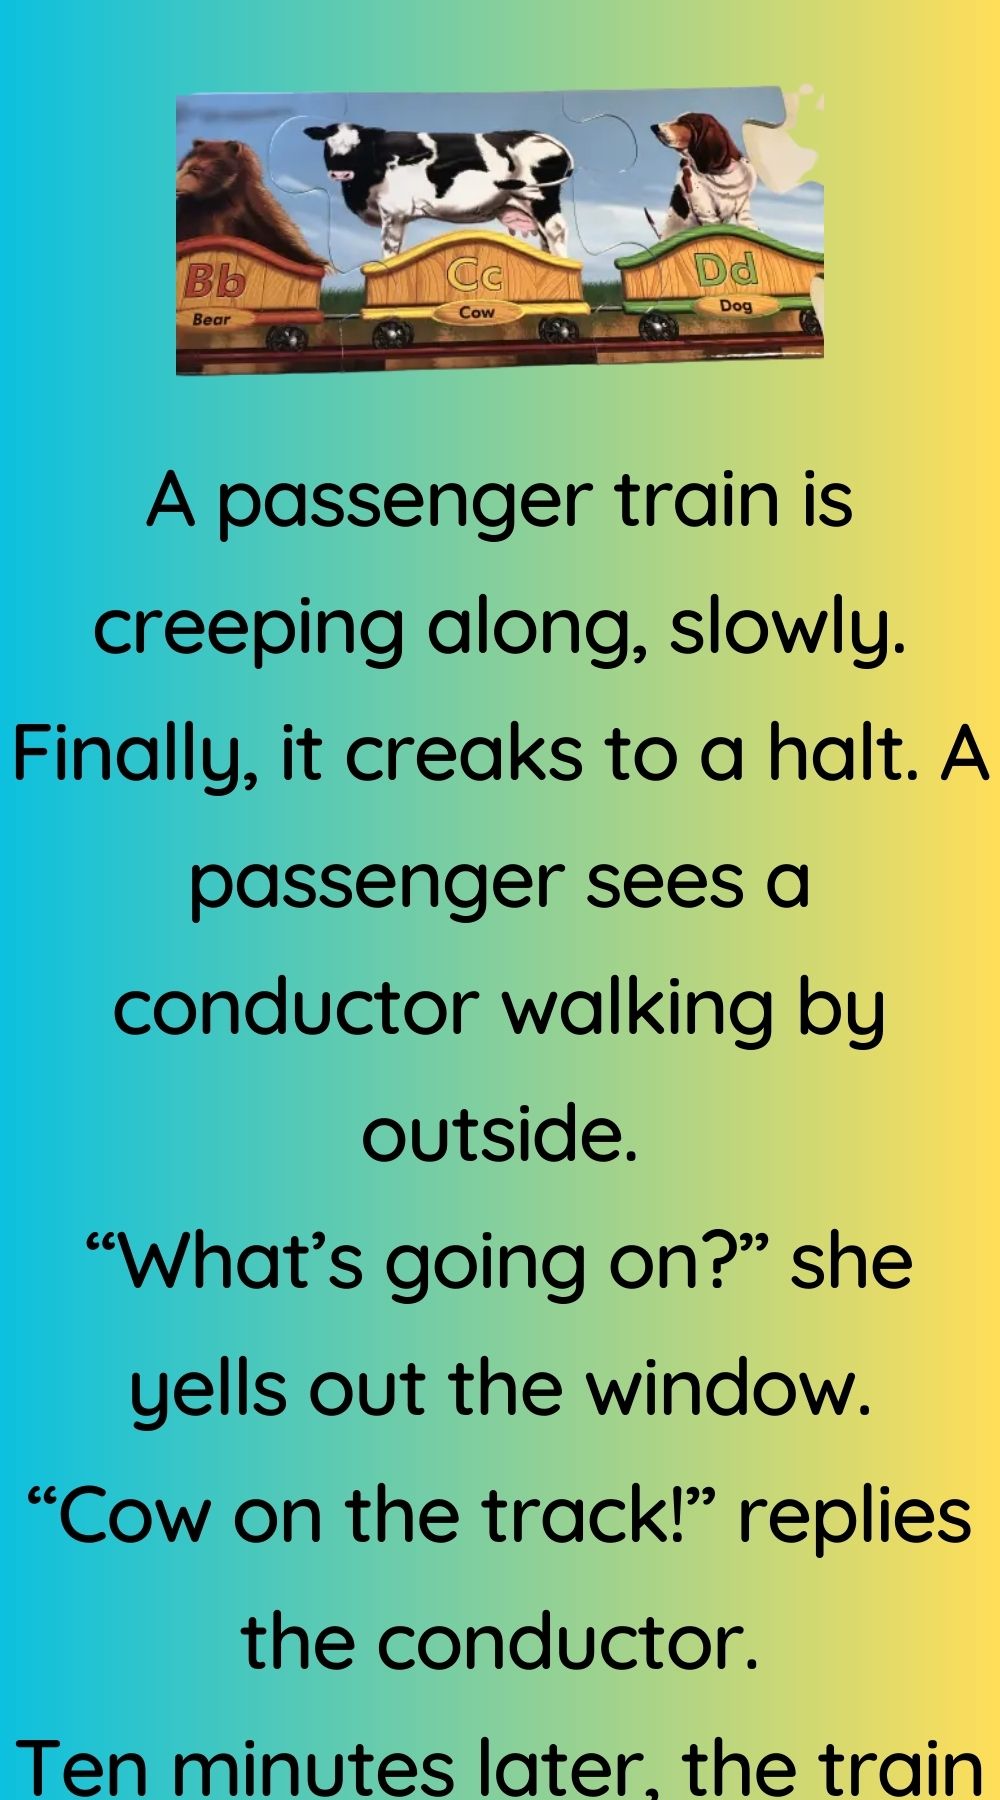 A passenger train is creeping along